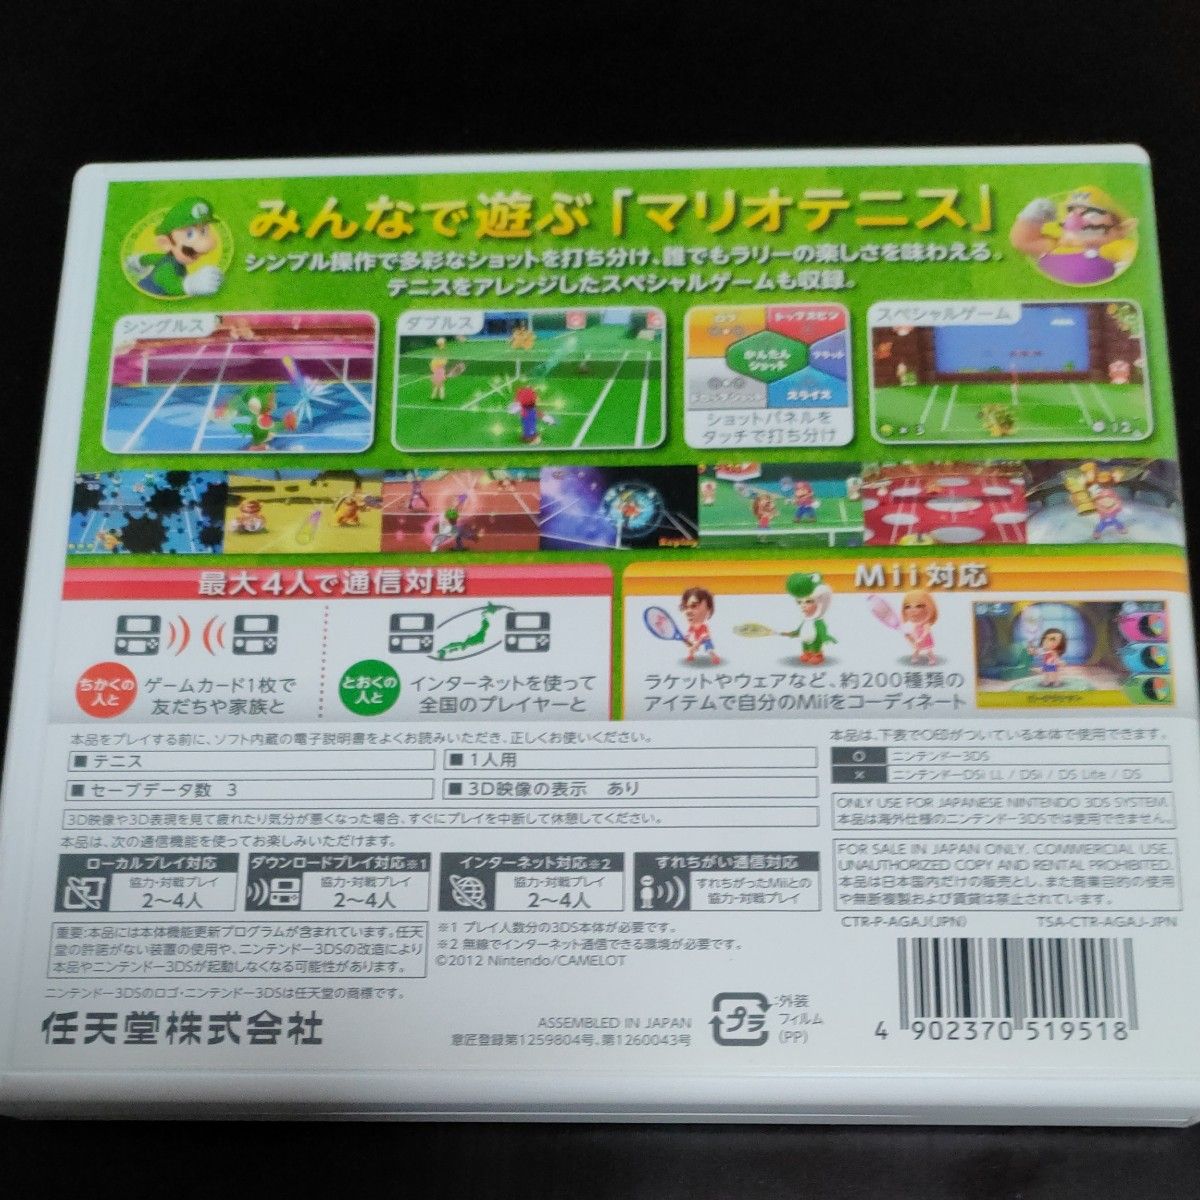 【3DS】 マリオテニスオープン [通常版]